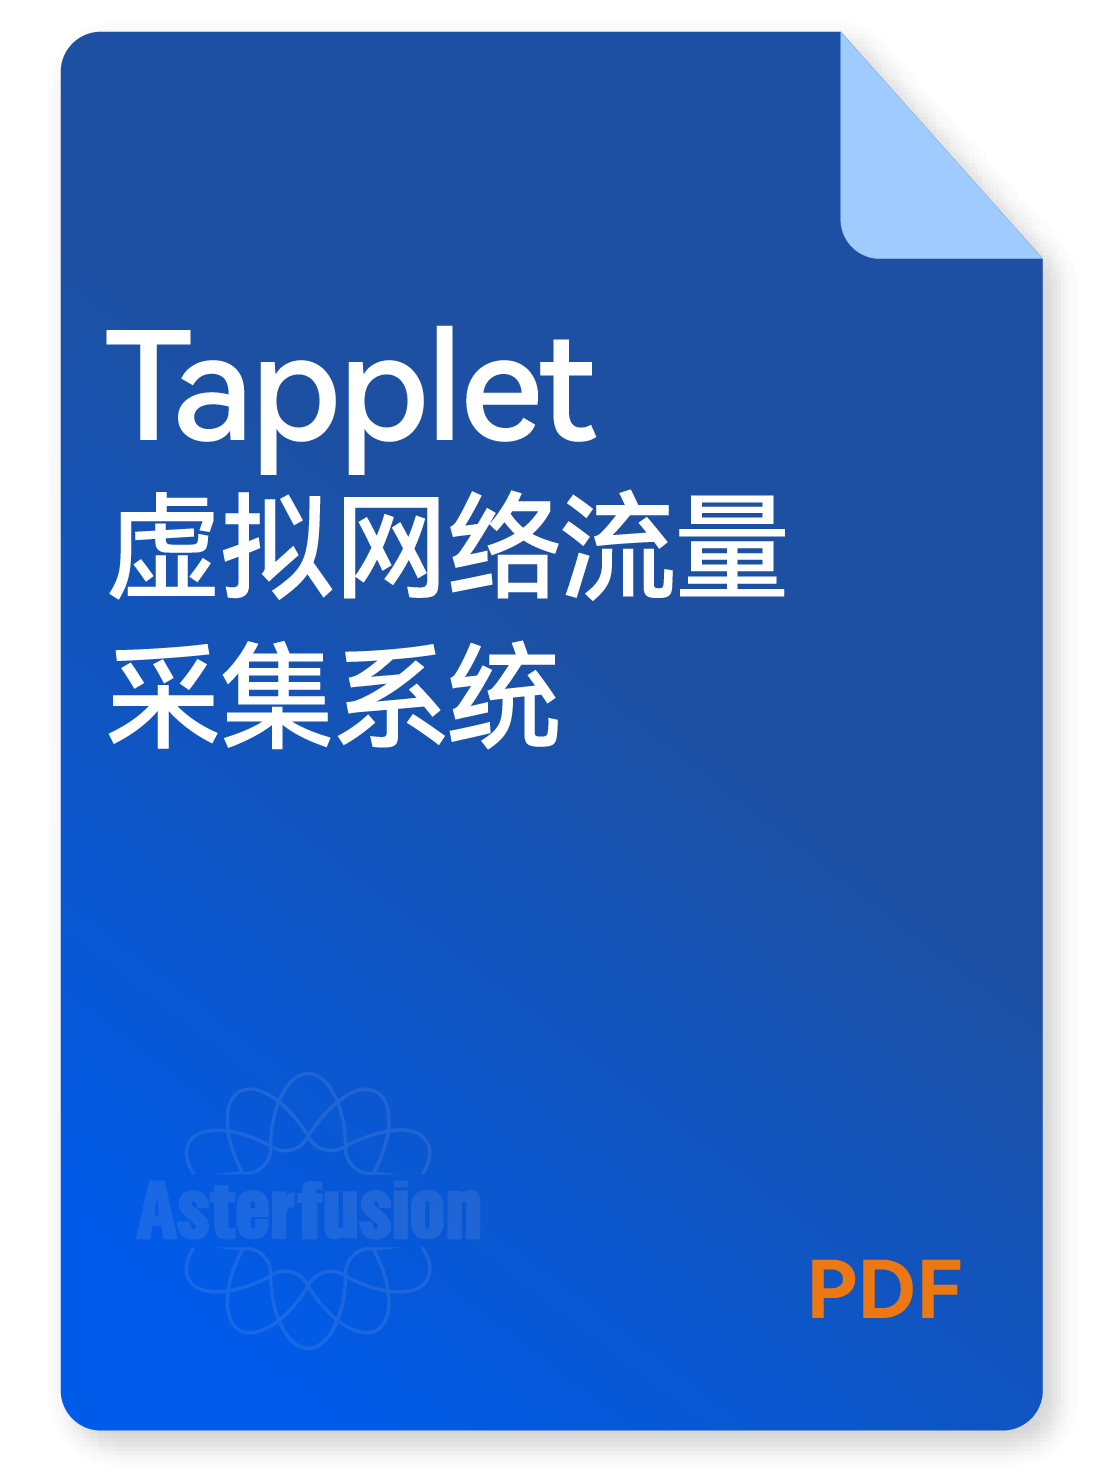 Tapplet虚拟网络流量采集系统的产品资料下载图标